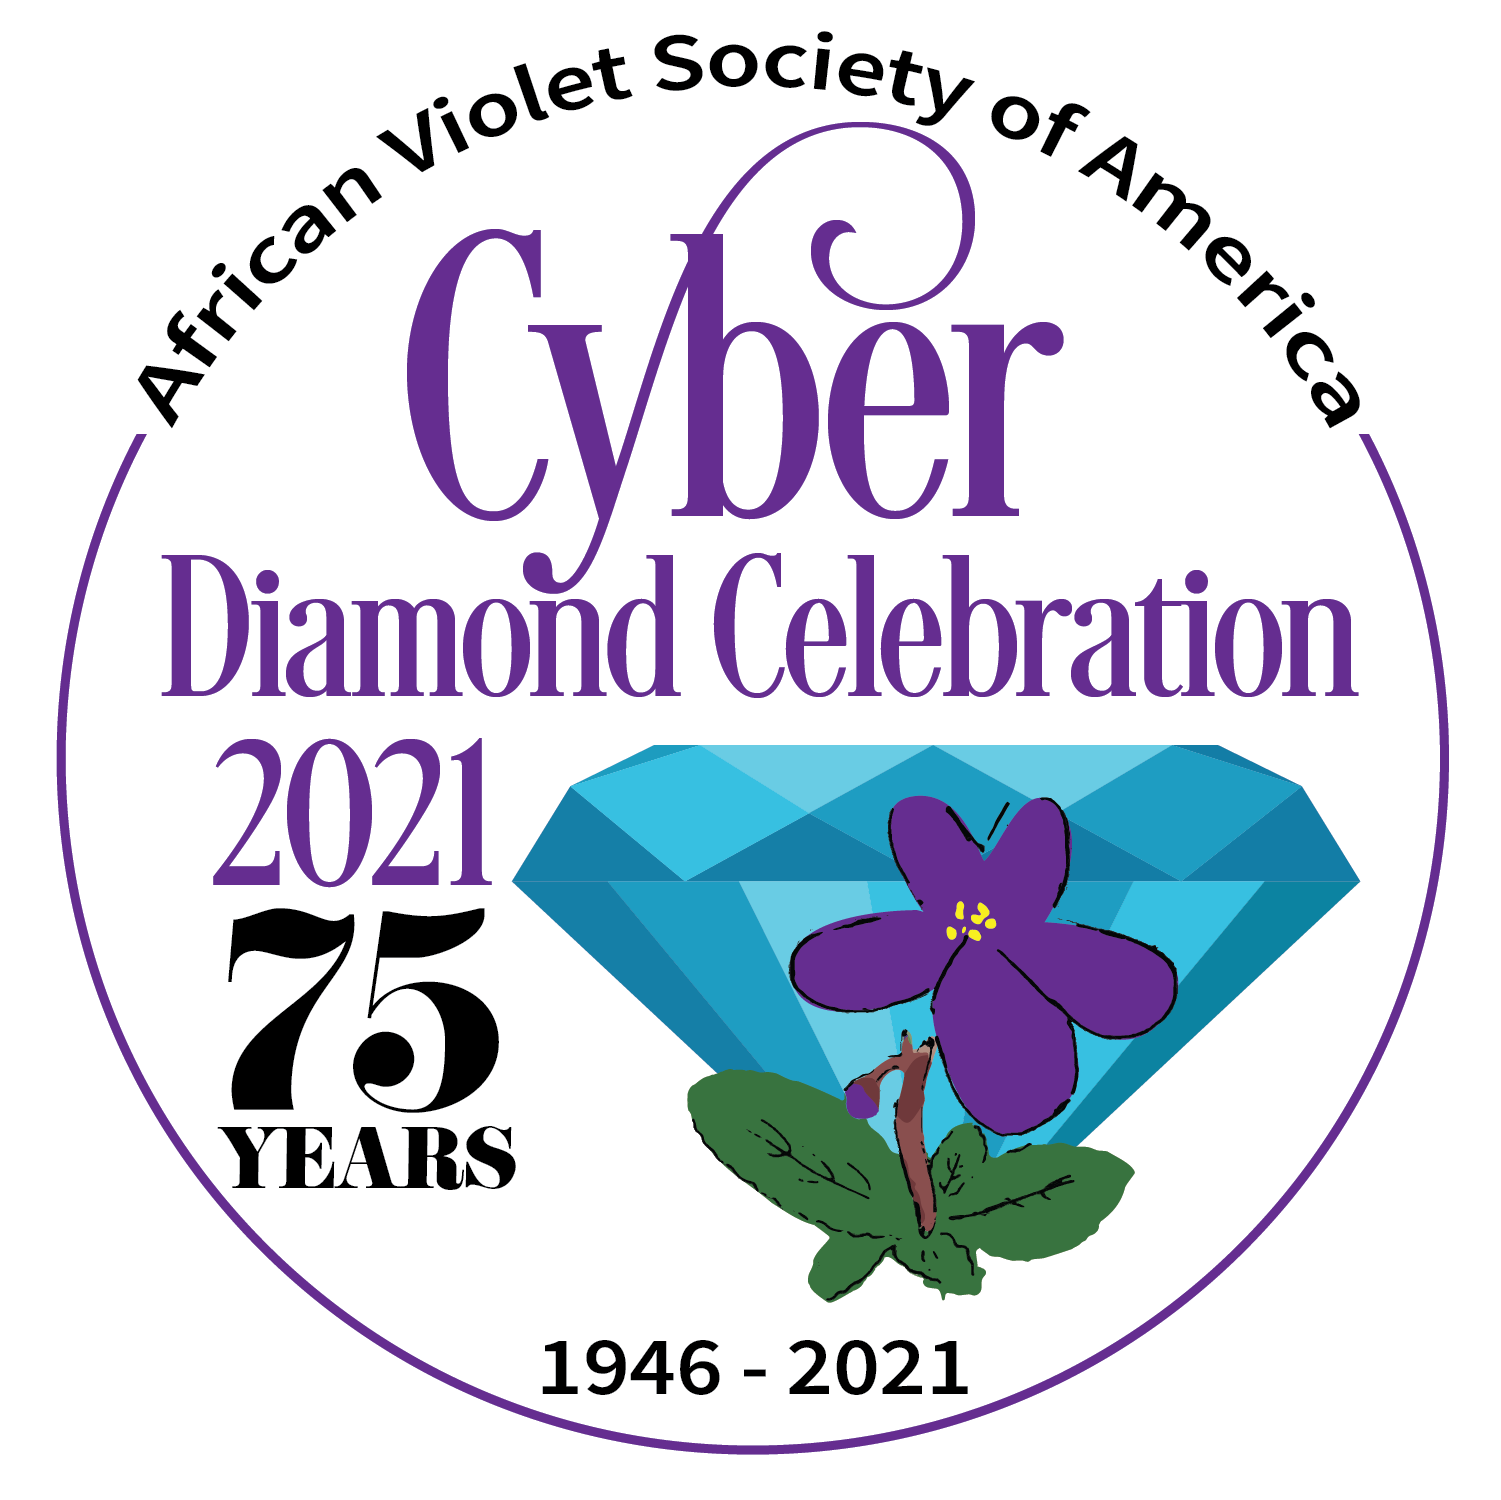 2021 Cyber Diamond Celebration